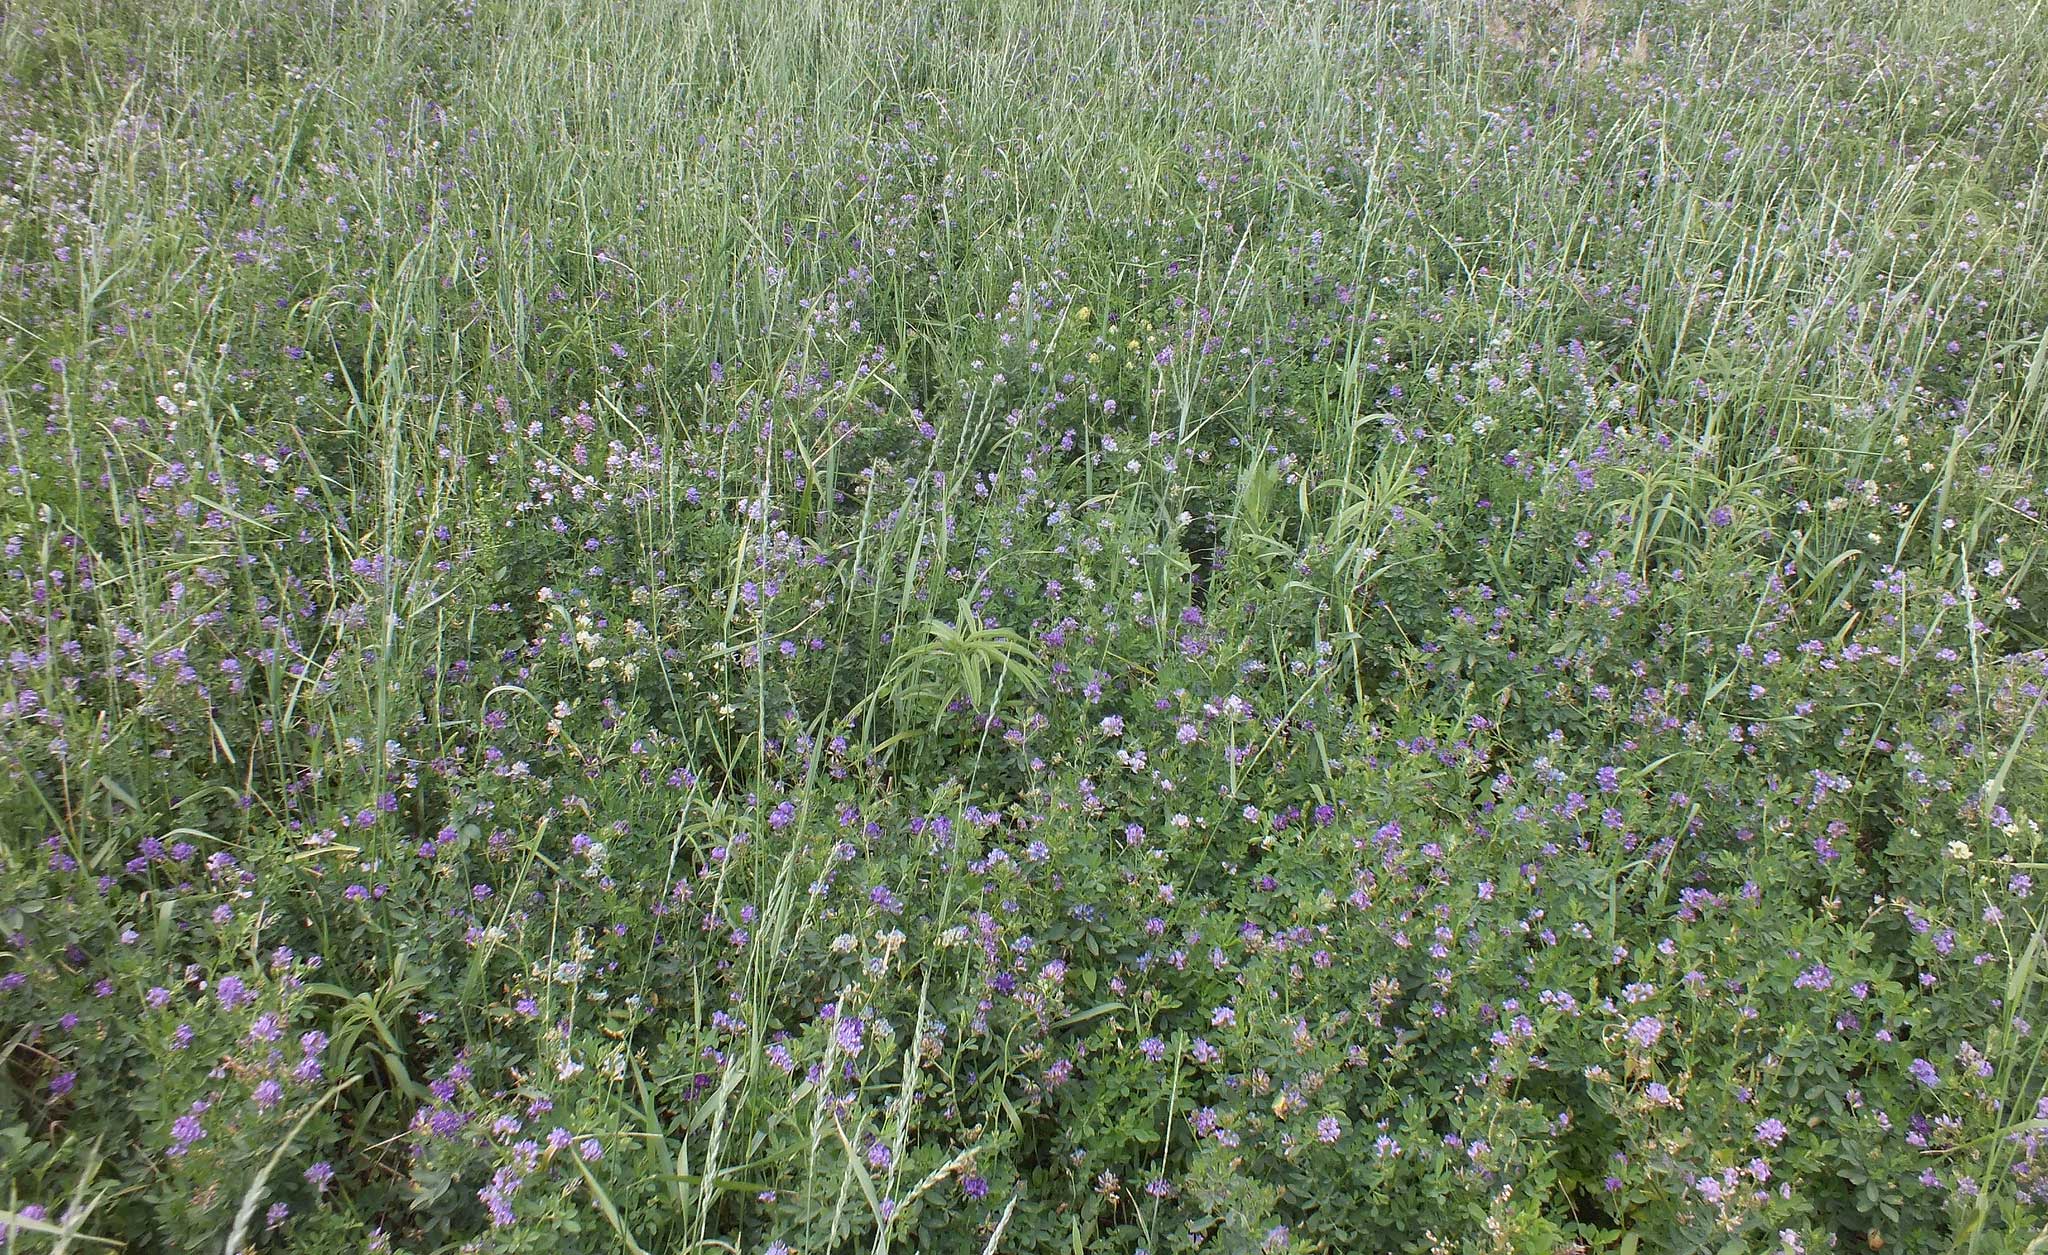 A field of flowering alfalfa.